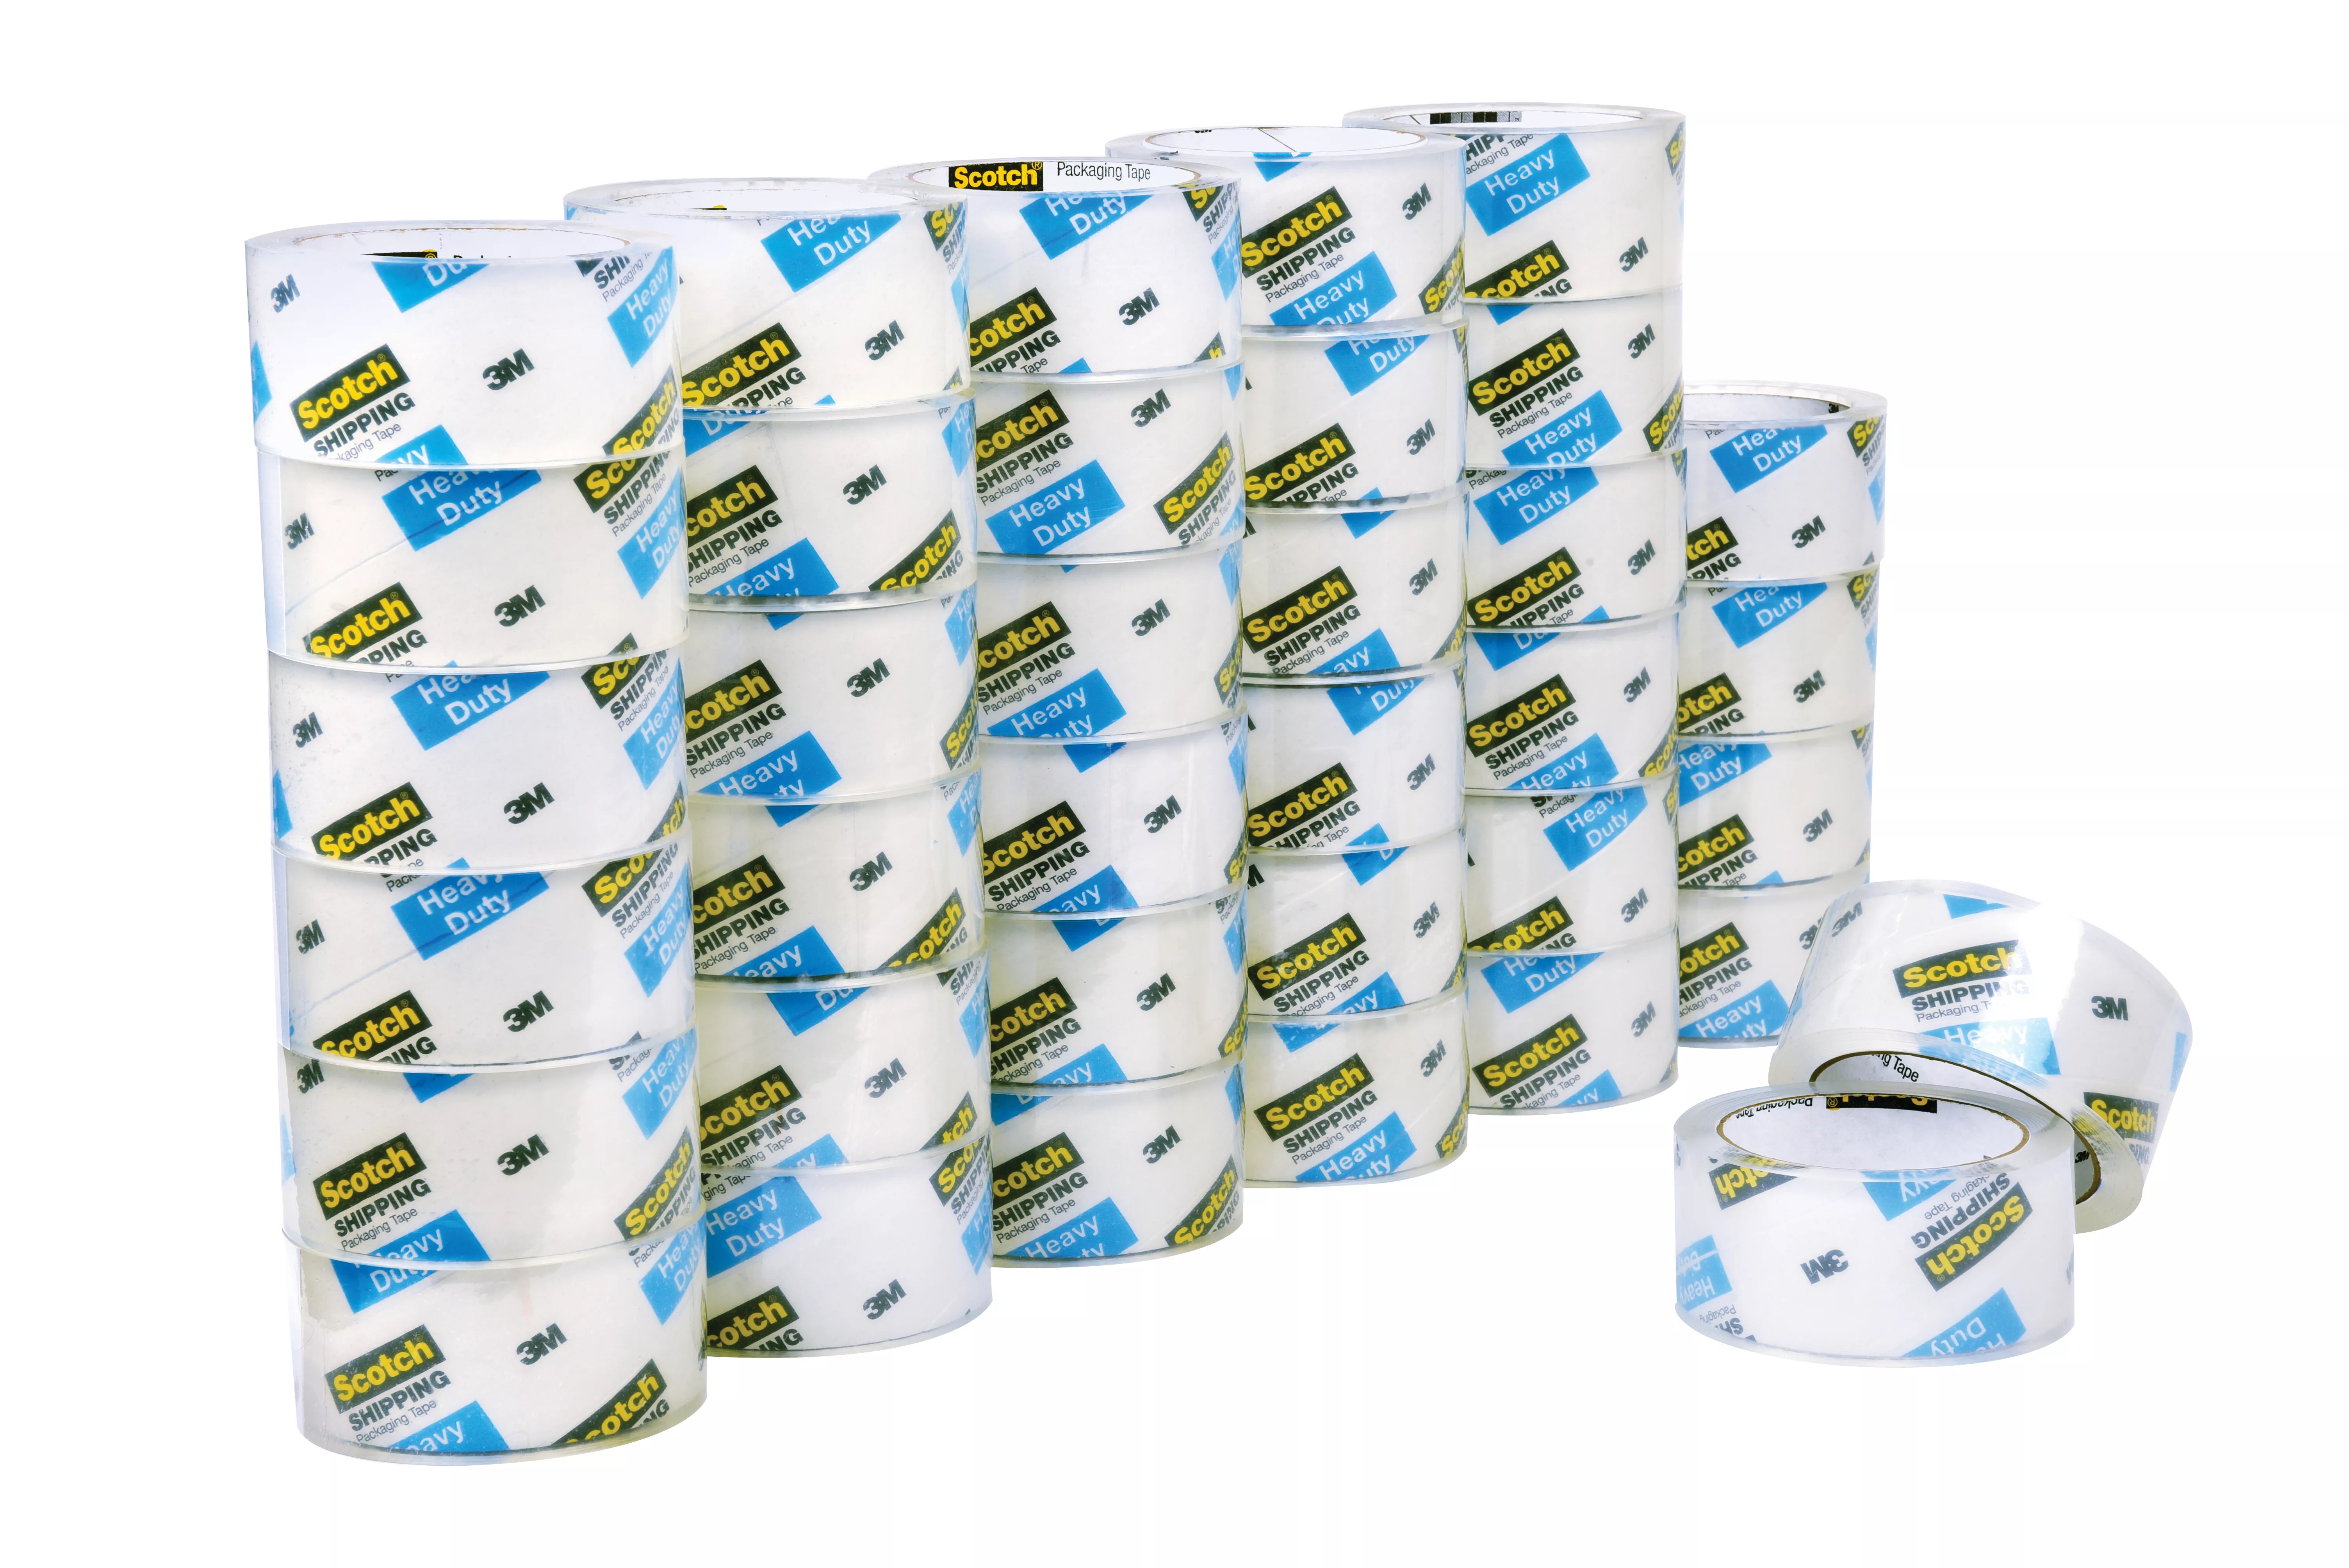 Scotch® Heavy Duty Shipping Packaging Tape 3850-CS36, 1.88 in x 54.6 yd (48 mm x 50 m), 6-6 Packs